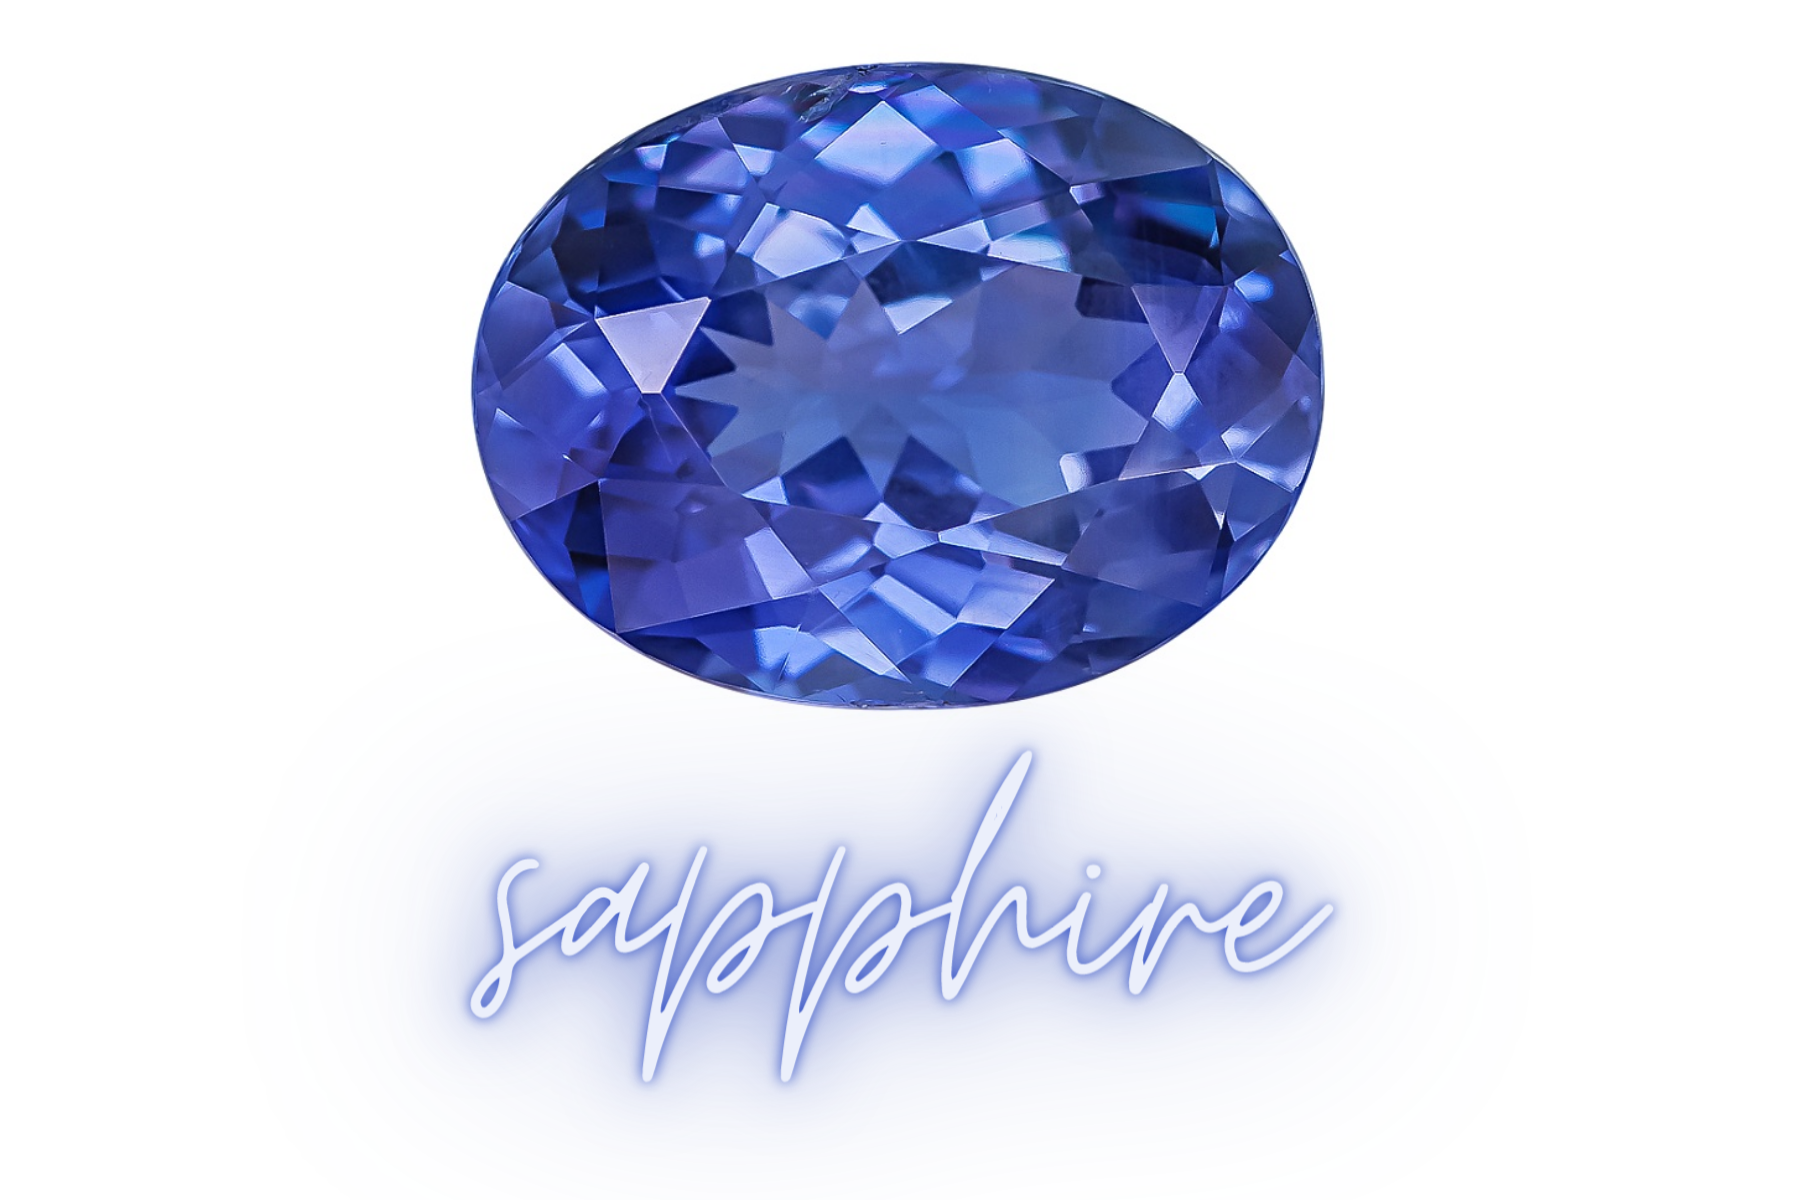 Oblong sapphire stone